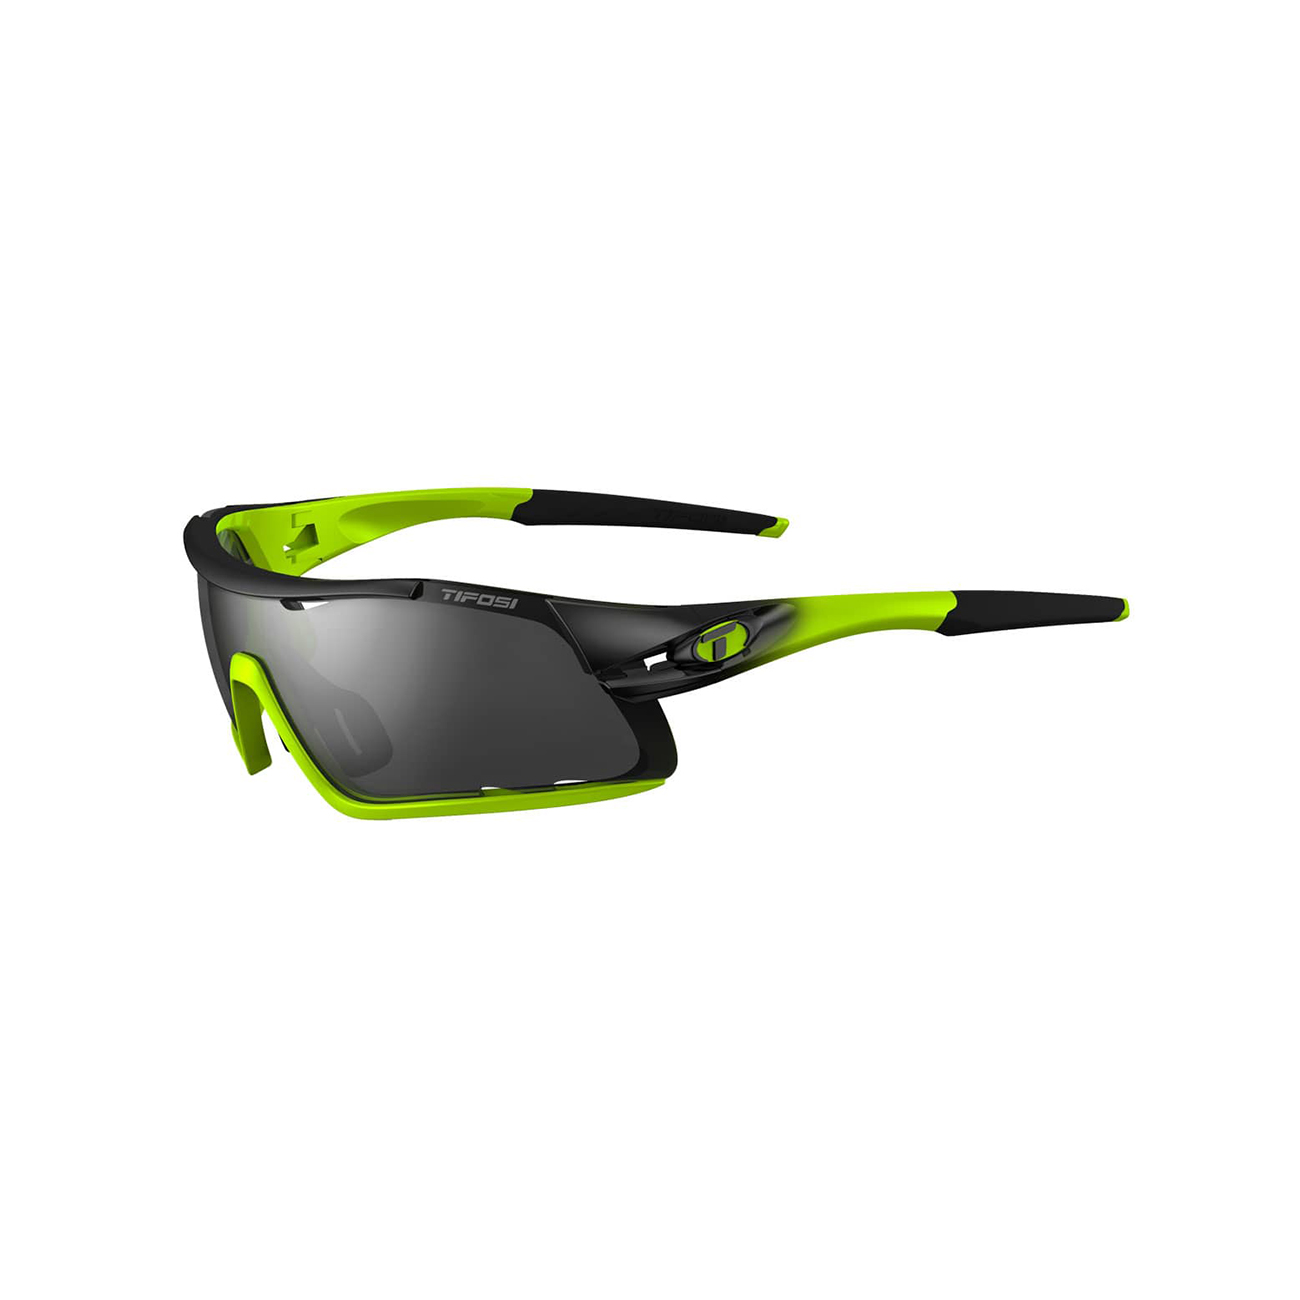 TIFOSI Cyklistické brýle - DAVOS - zelená/černá